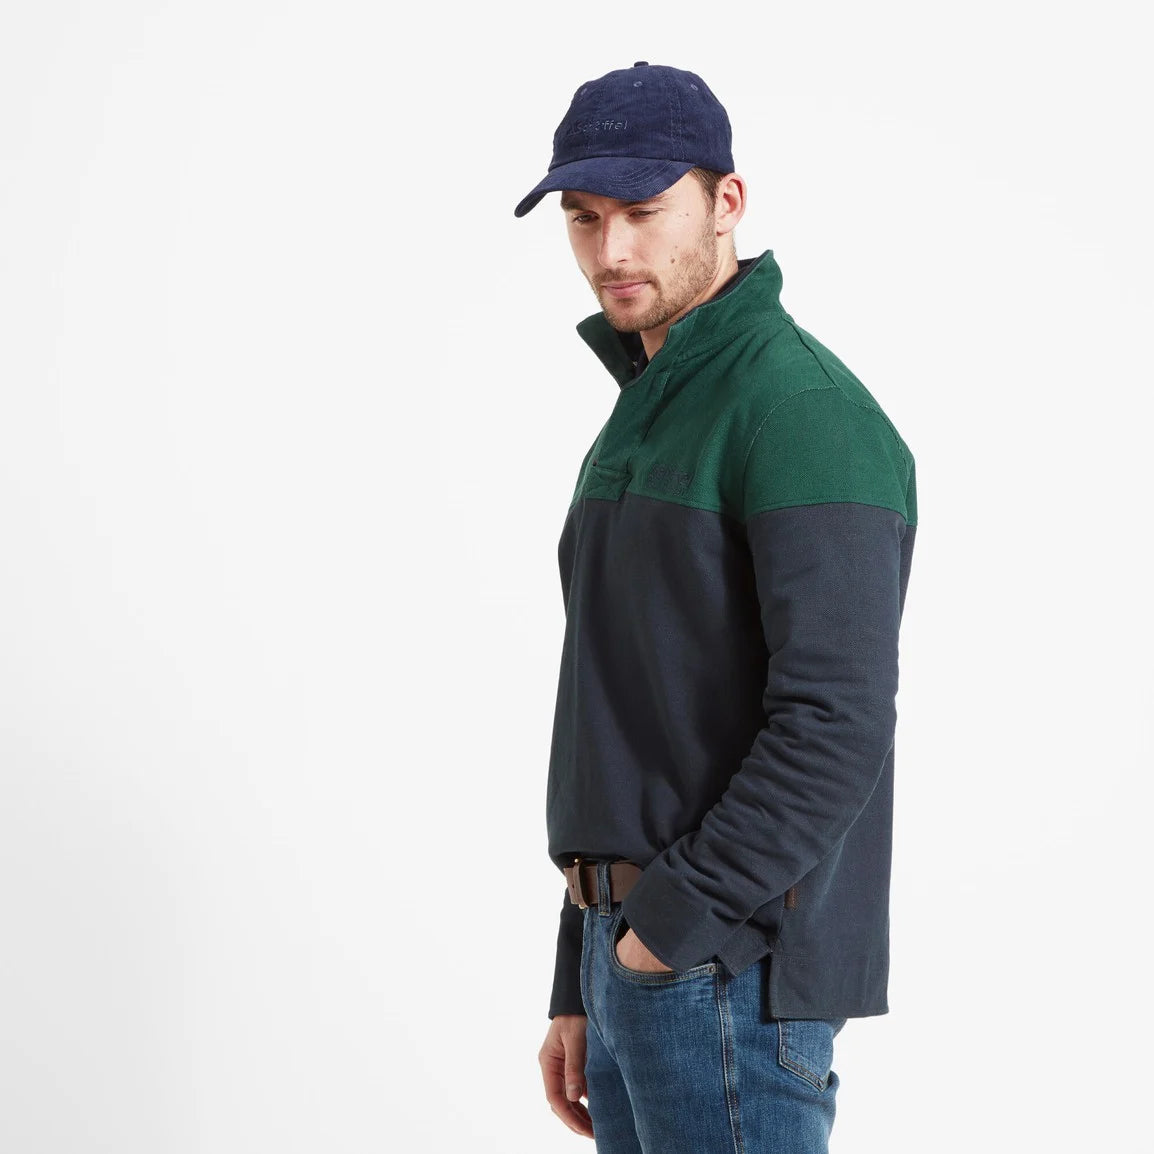 Schoffel Unisex Helford Heritage Sweatshirt - Navy/Pine Green